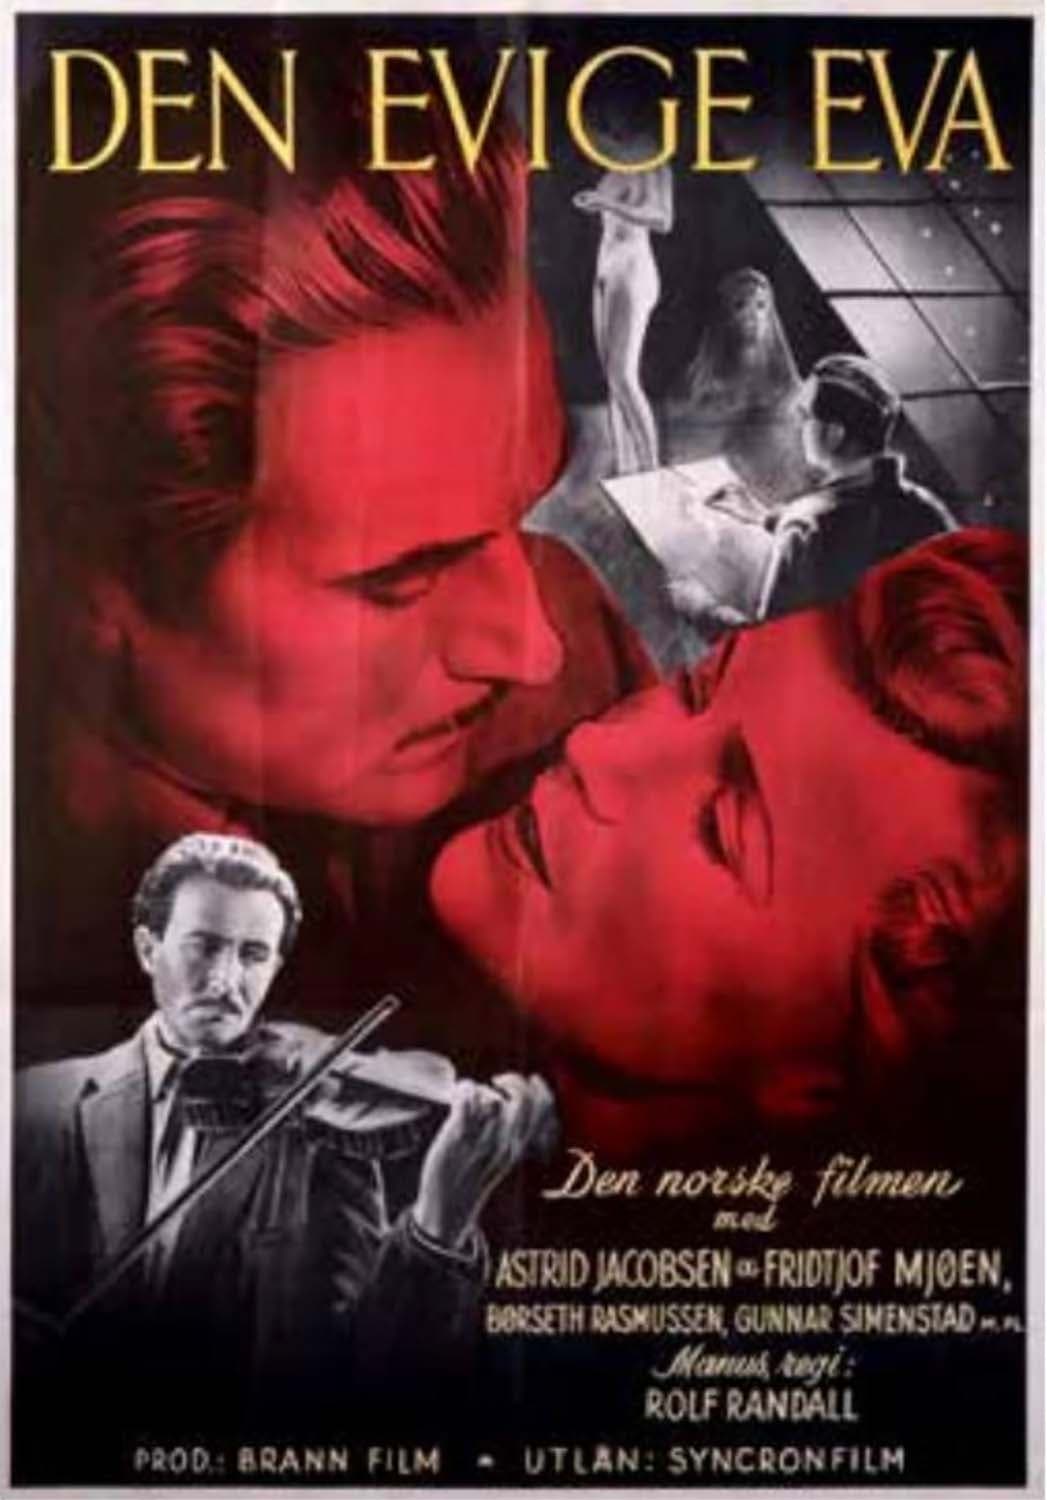 Den evige Eva (1953)